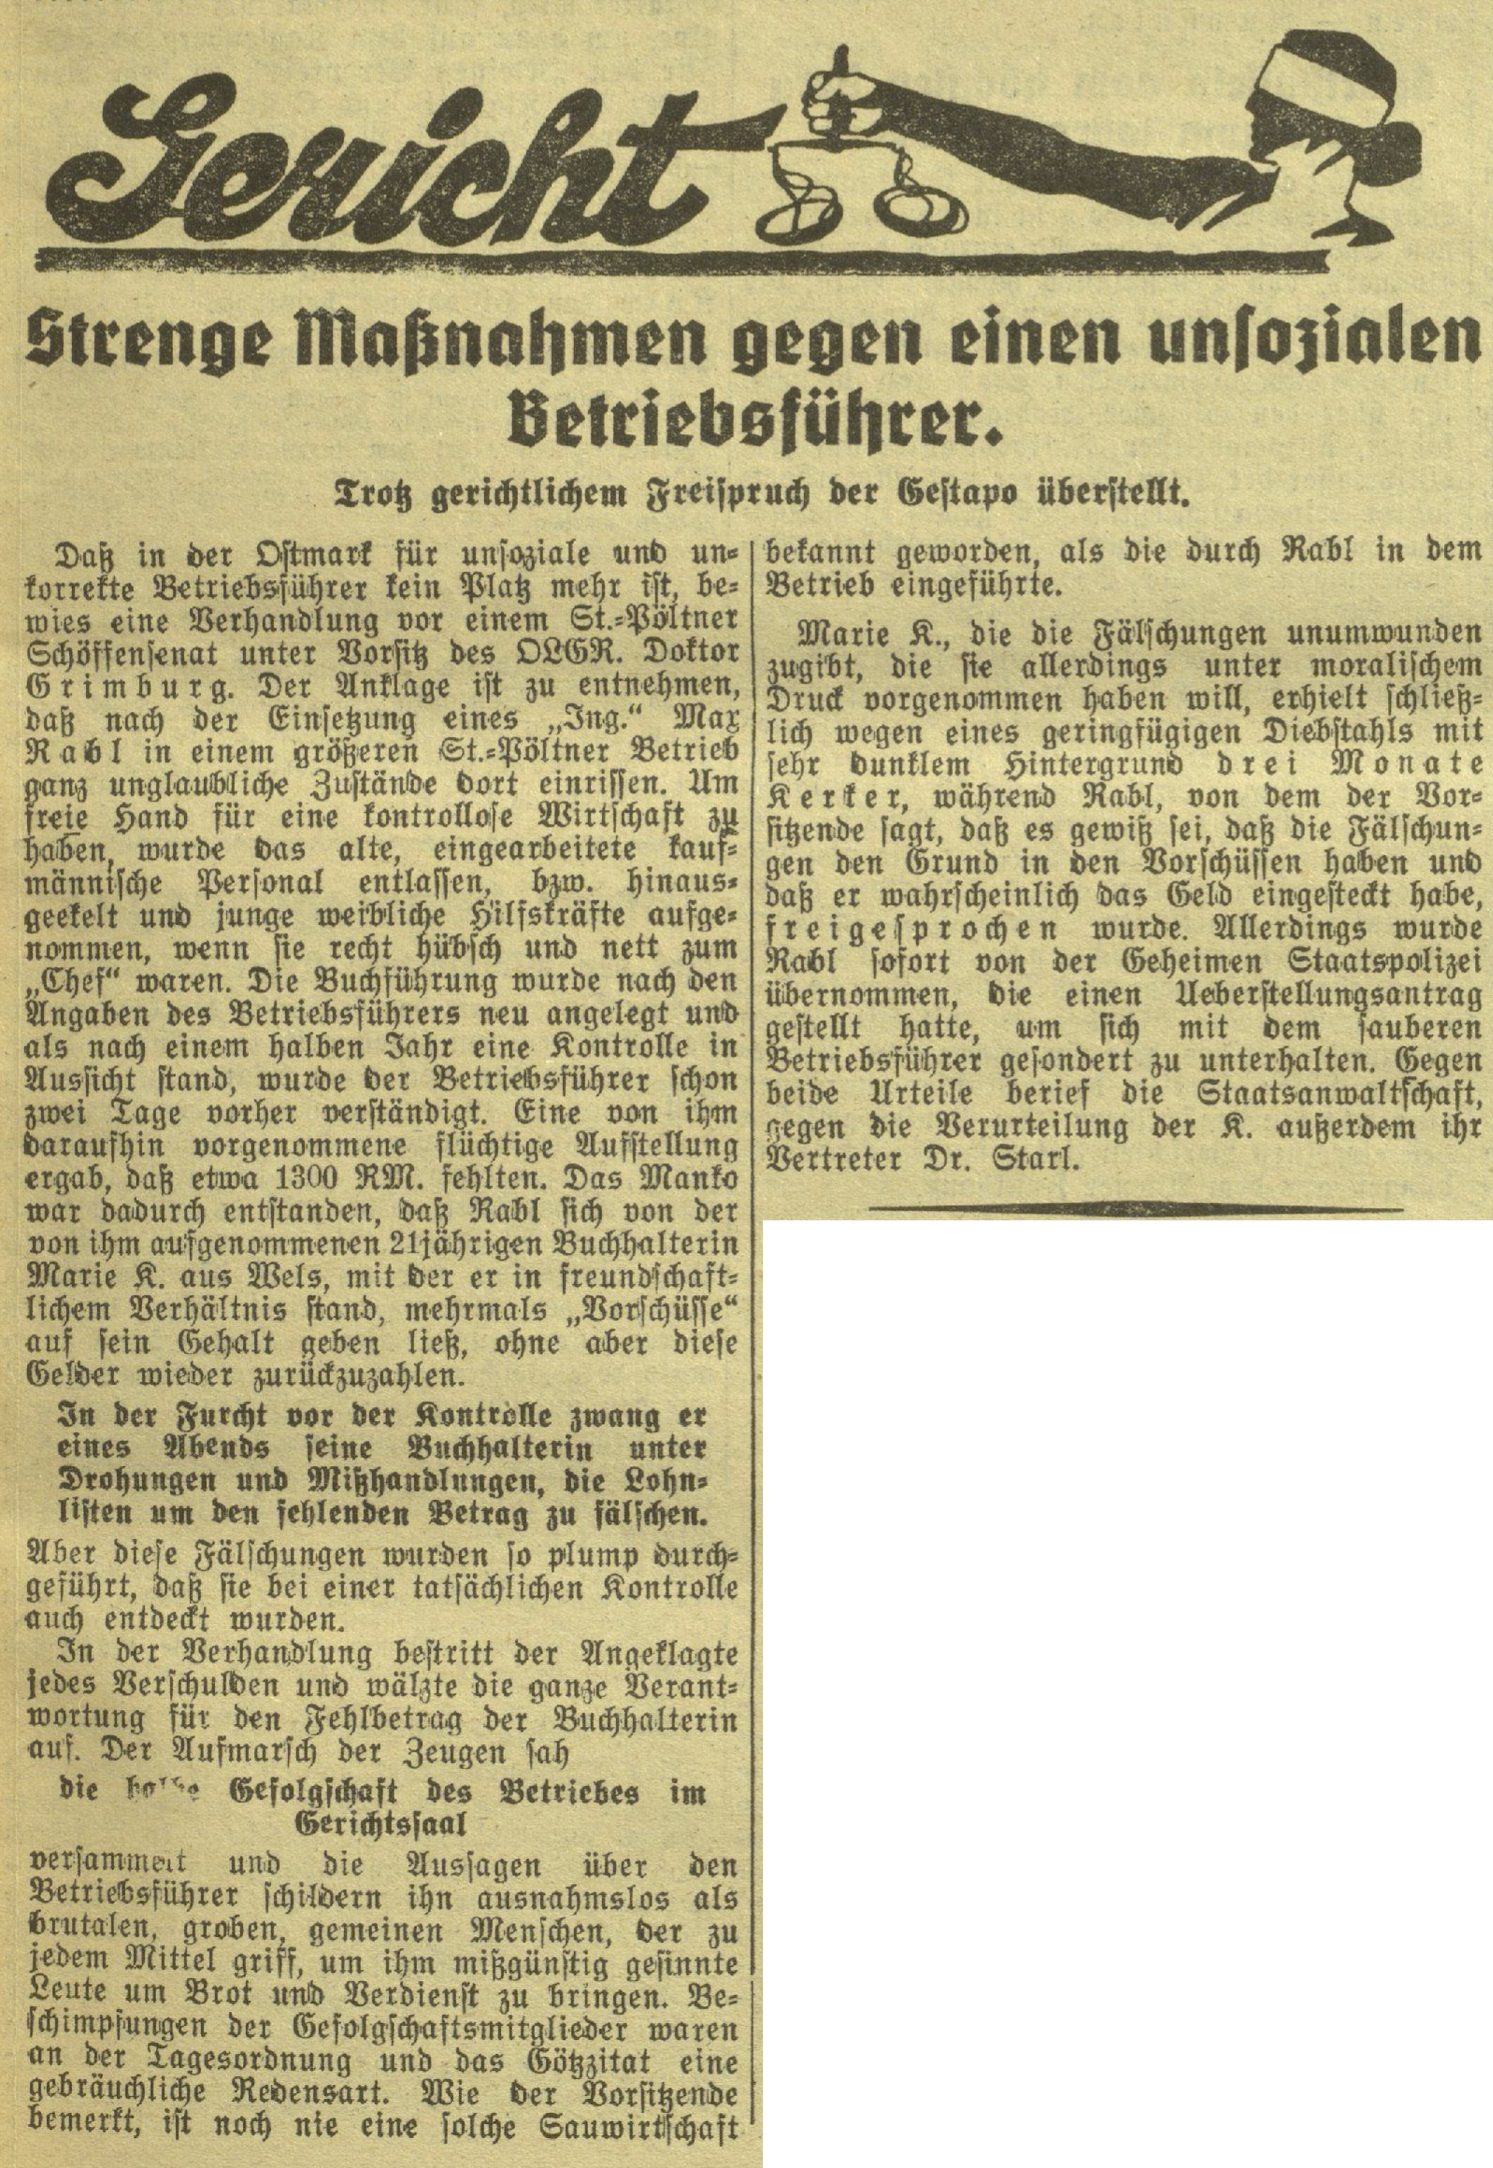 Das kleine Volksblatt 7.7.1939, S. 11 (http://anno.onb.ac.at/cgi-content/anno?aid=dkv&datum=19390707&query=%22Max+Rabl%22&ref=anno-search&seite=11)